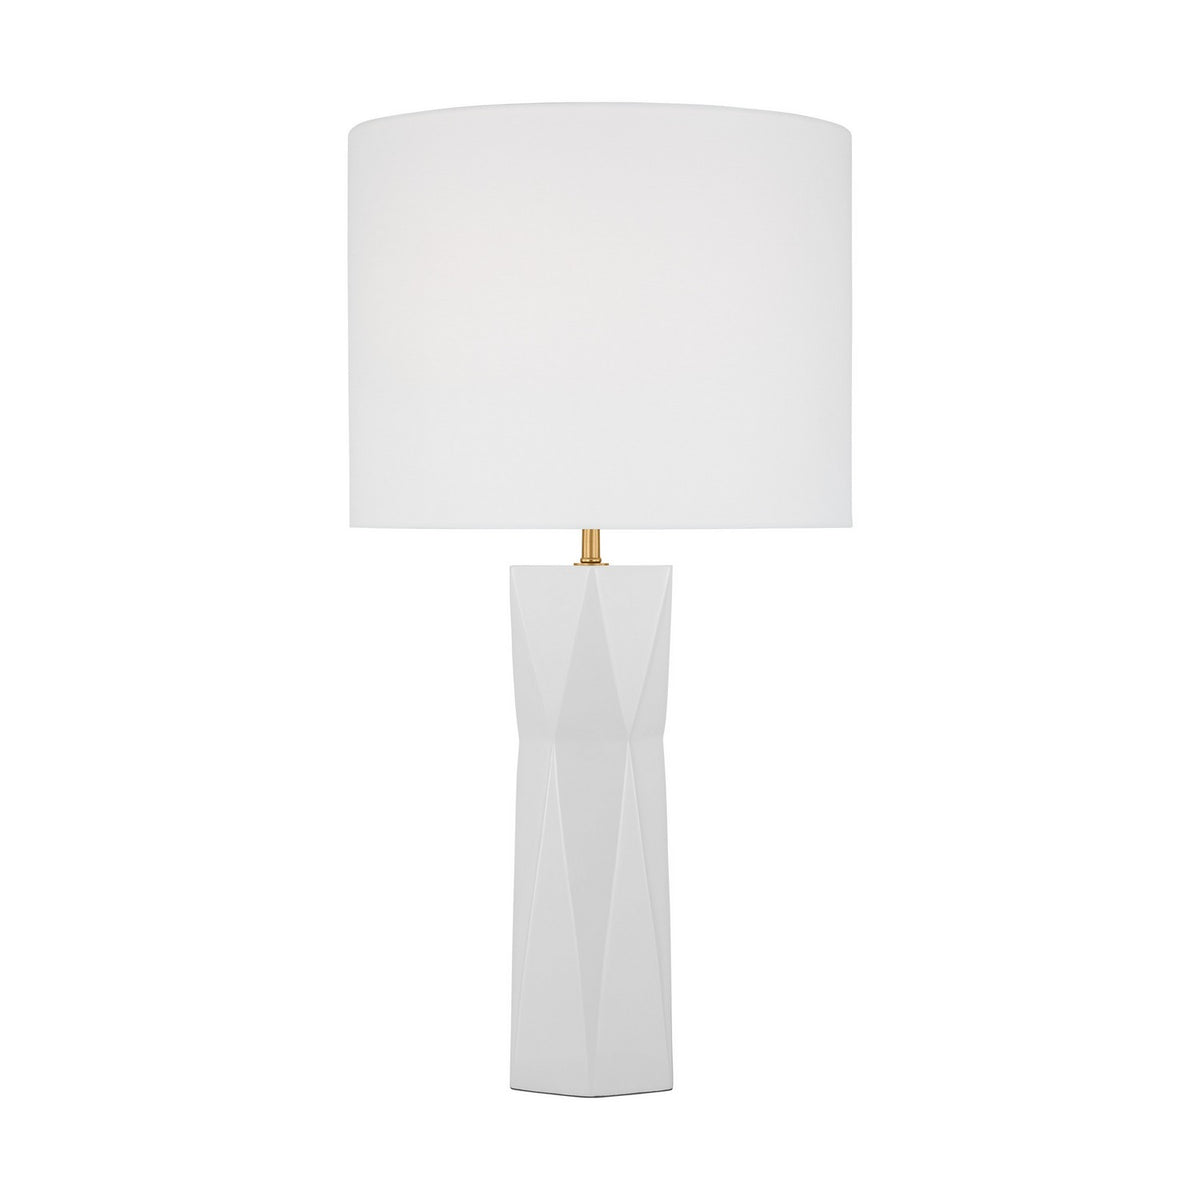 Visual Comfort Studio Canada - DJT1061GW1 - One Light Table Lamp - Fernwood - Gloss White